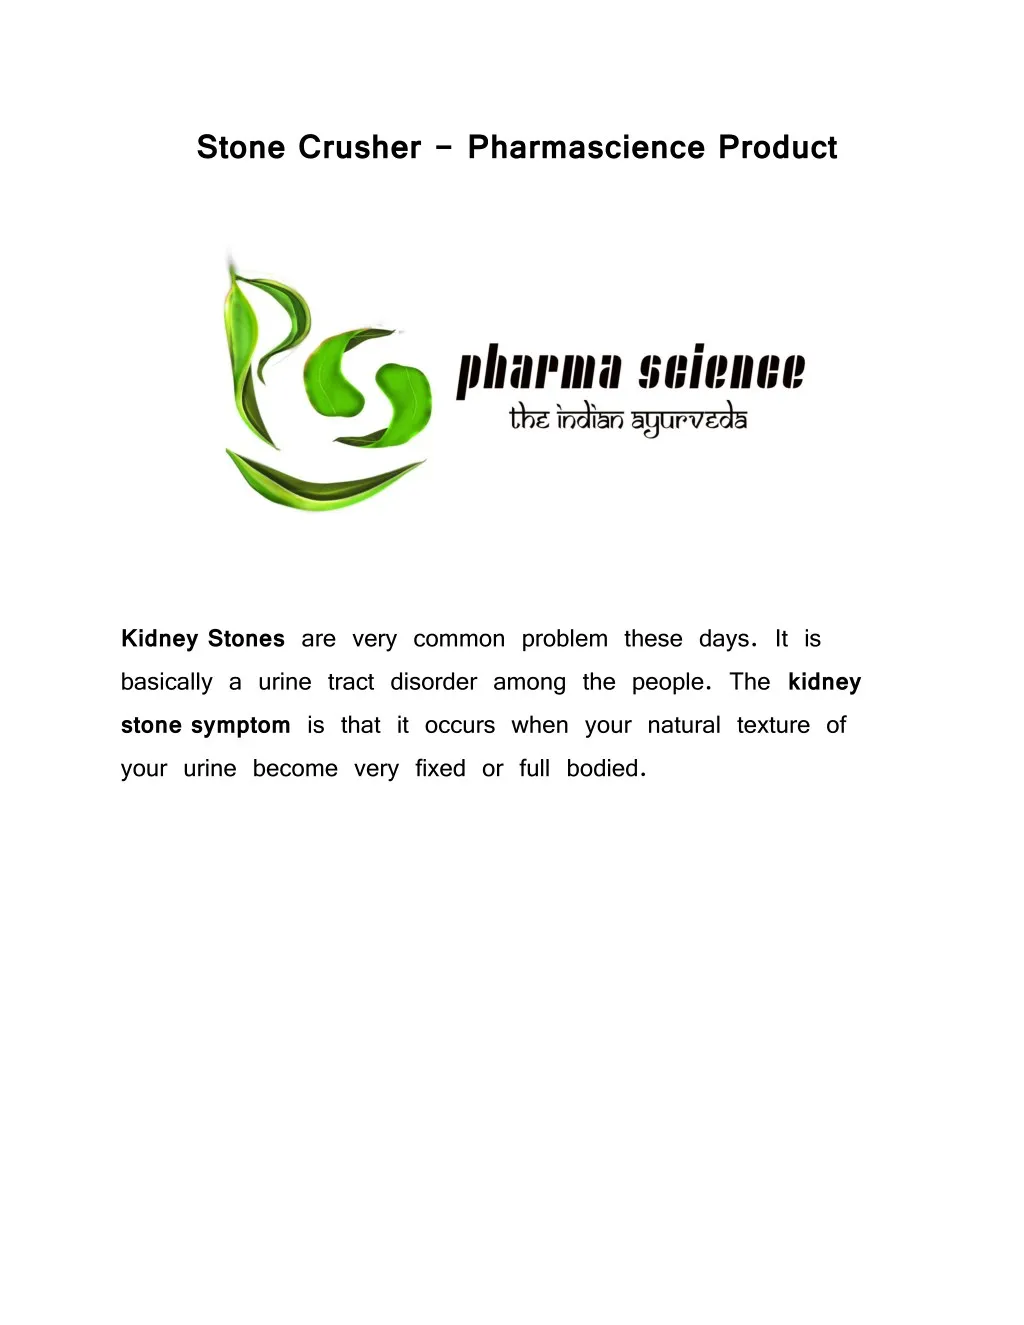 stone crusher pharmascience product